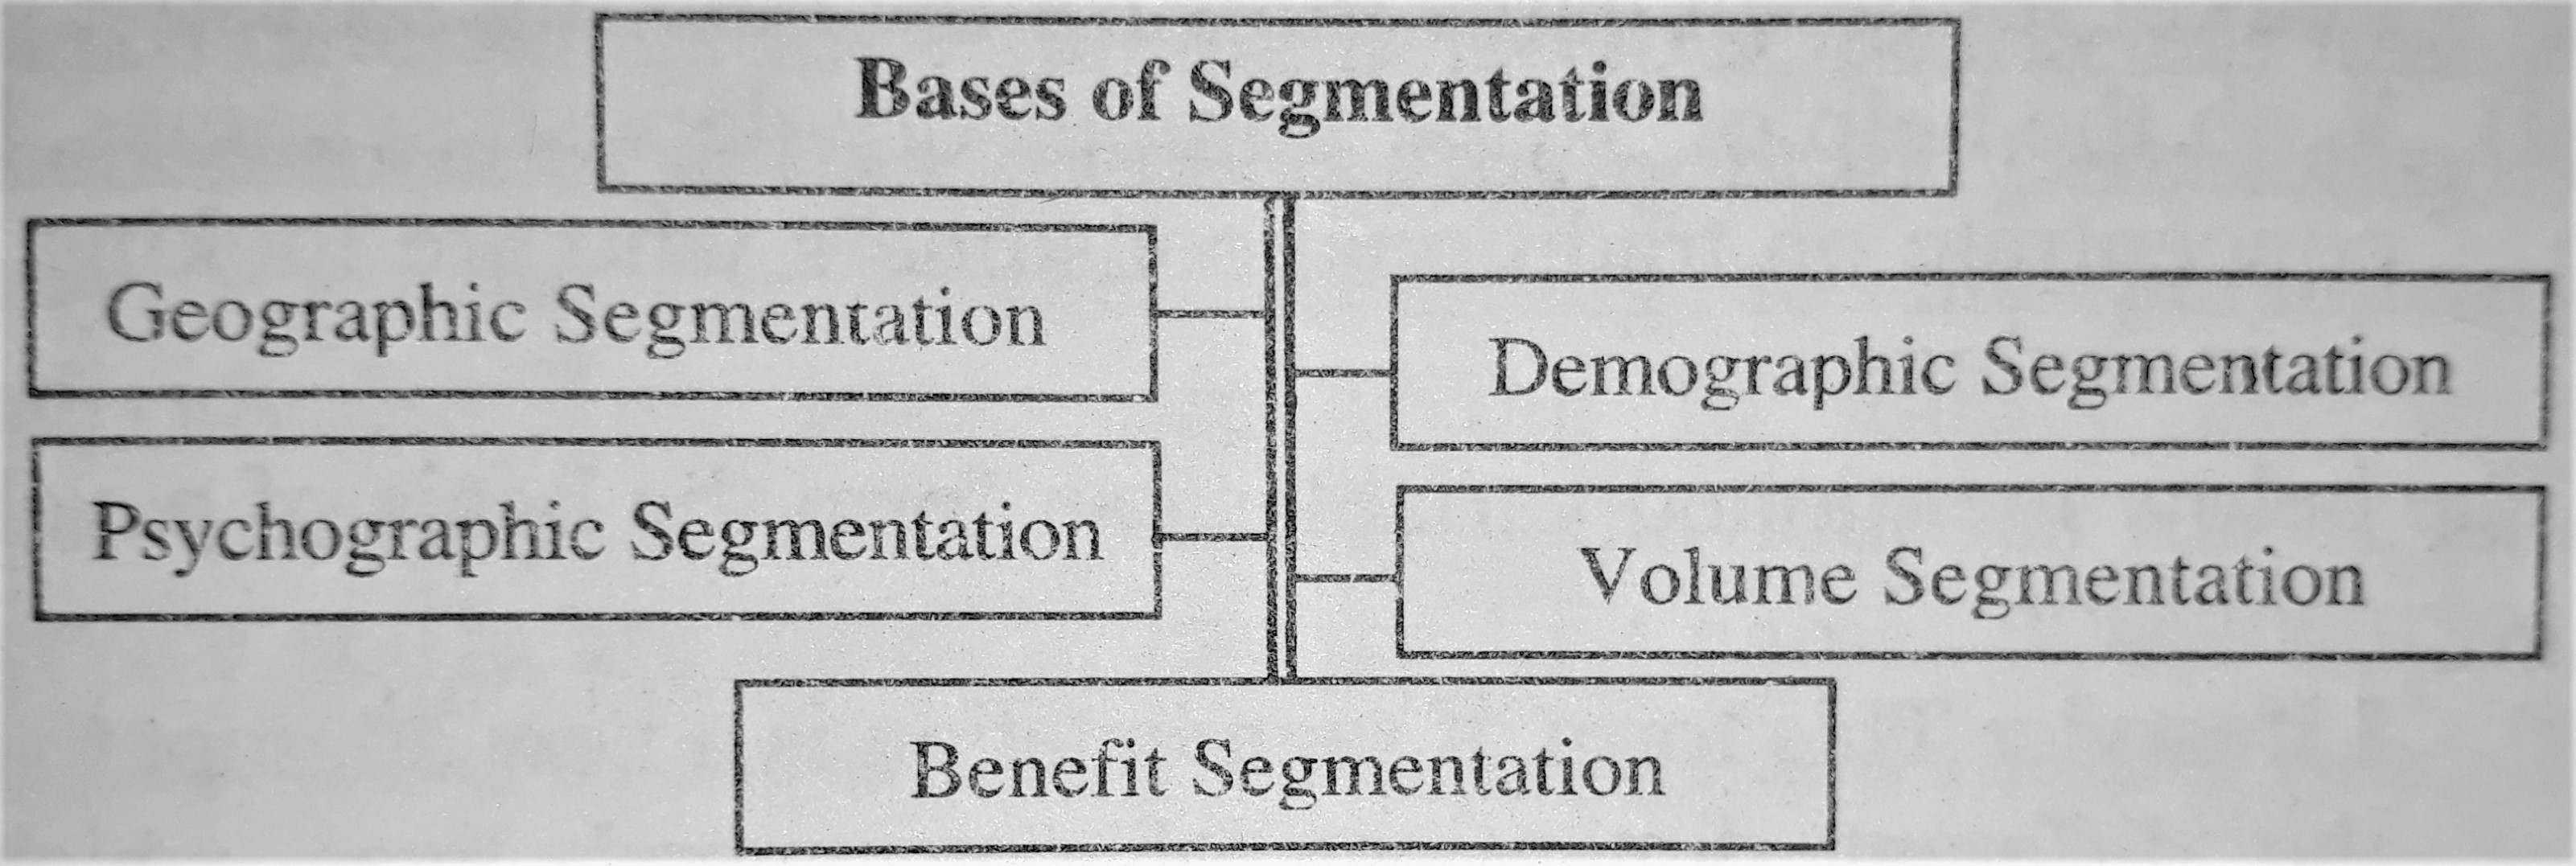 Bases of Segmentation